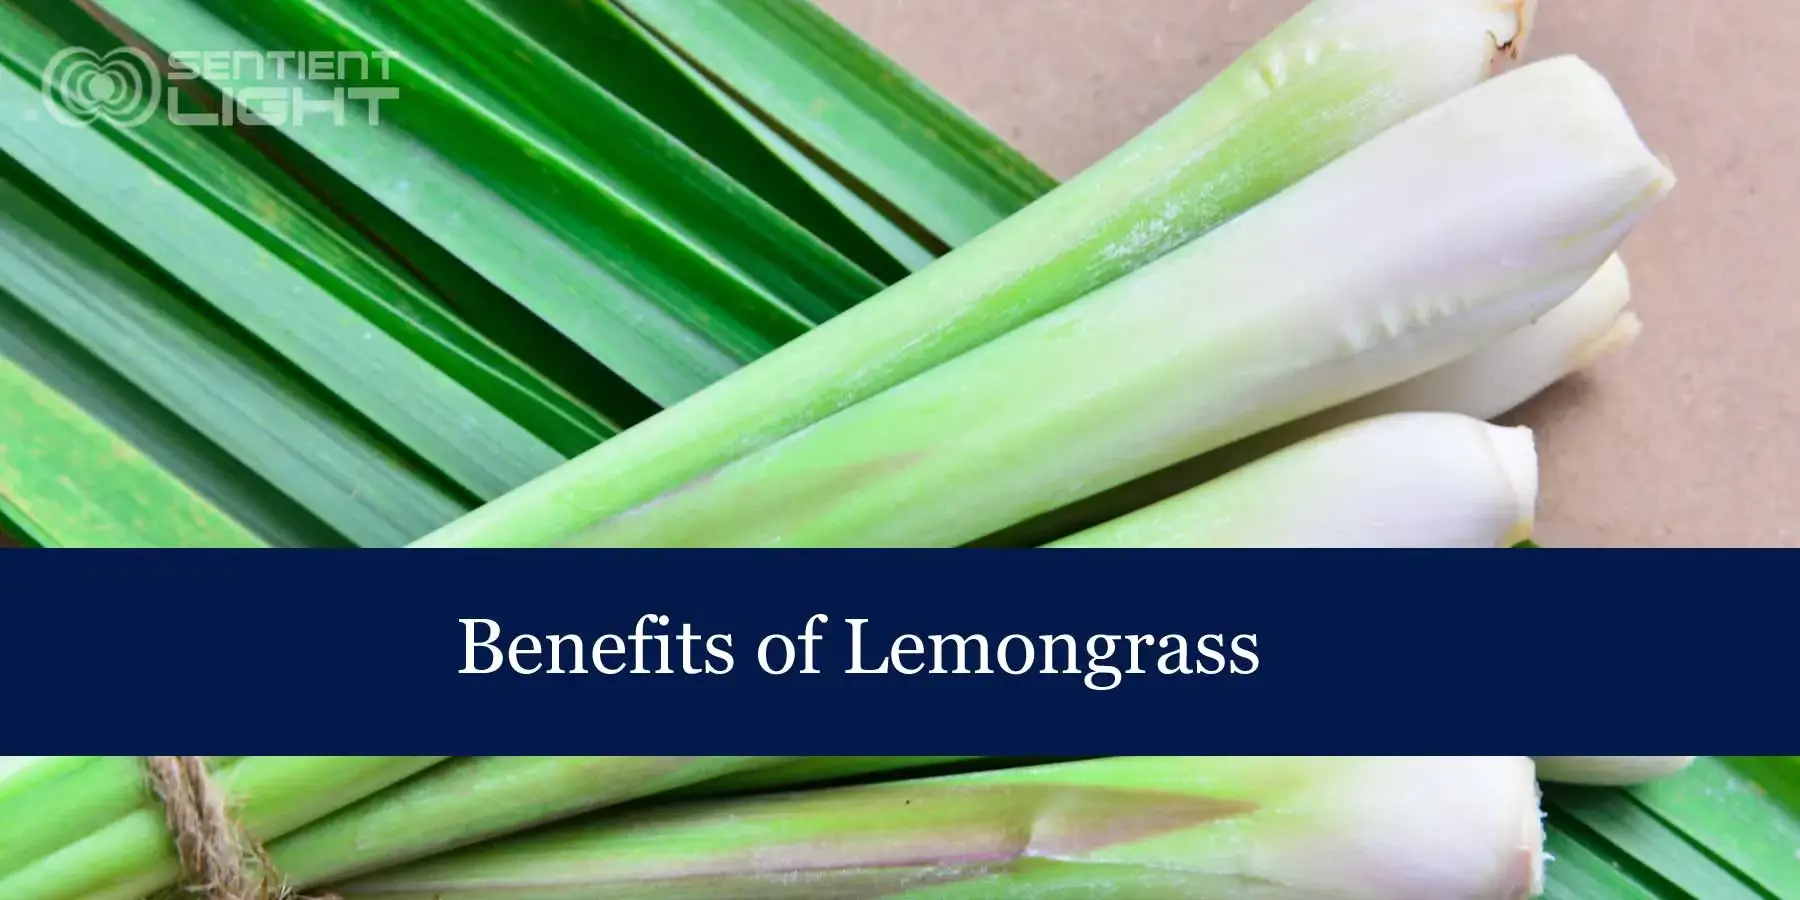 Benefits and Uses of Lemongrass